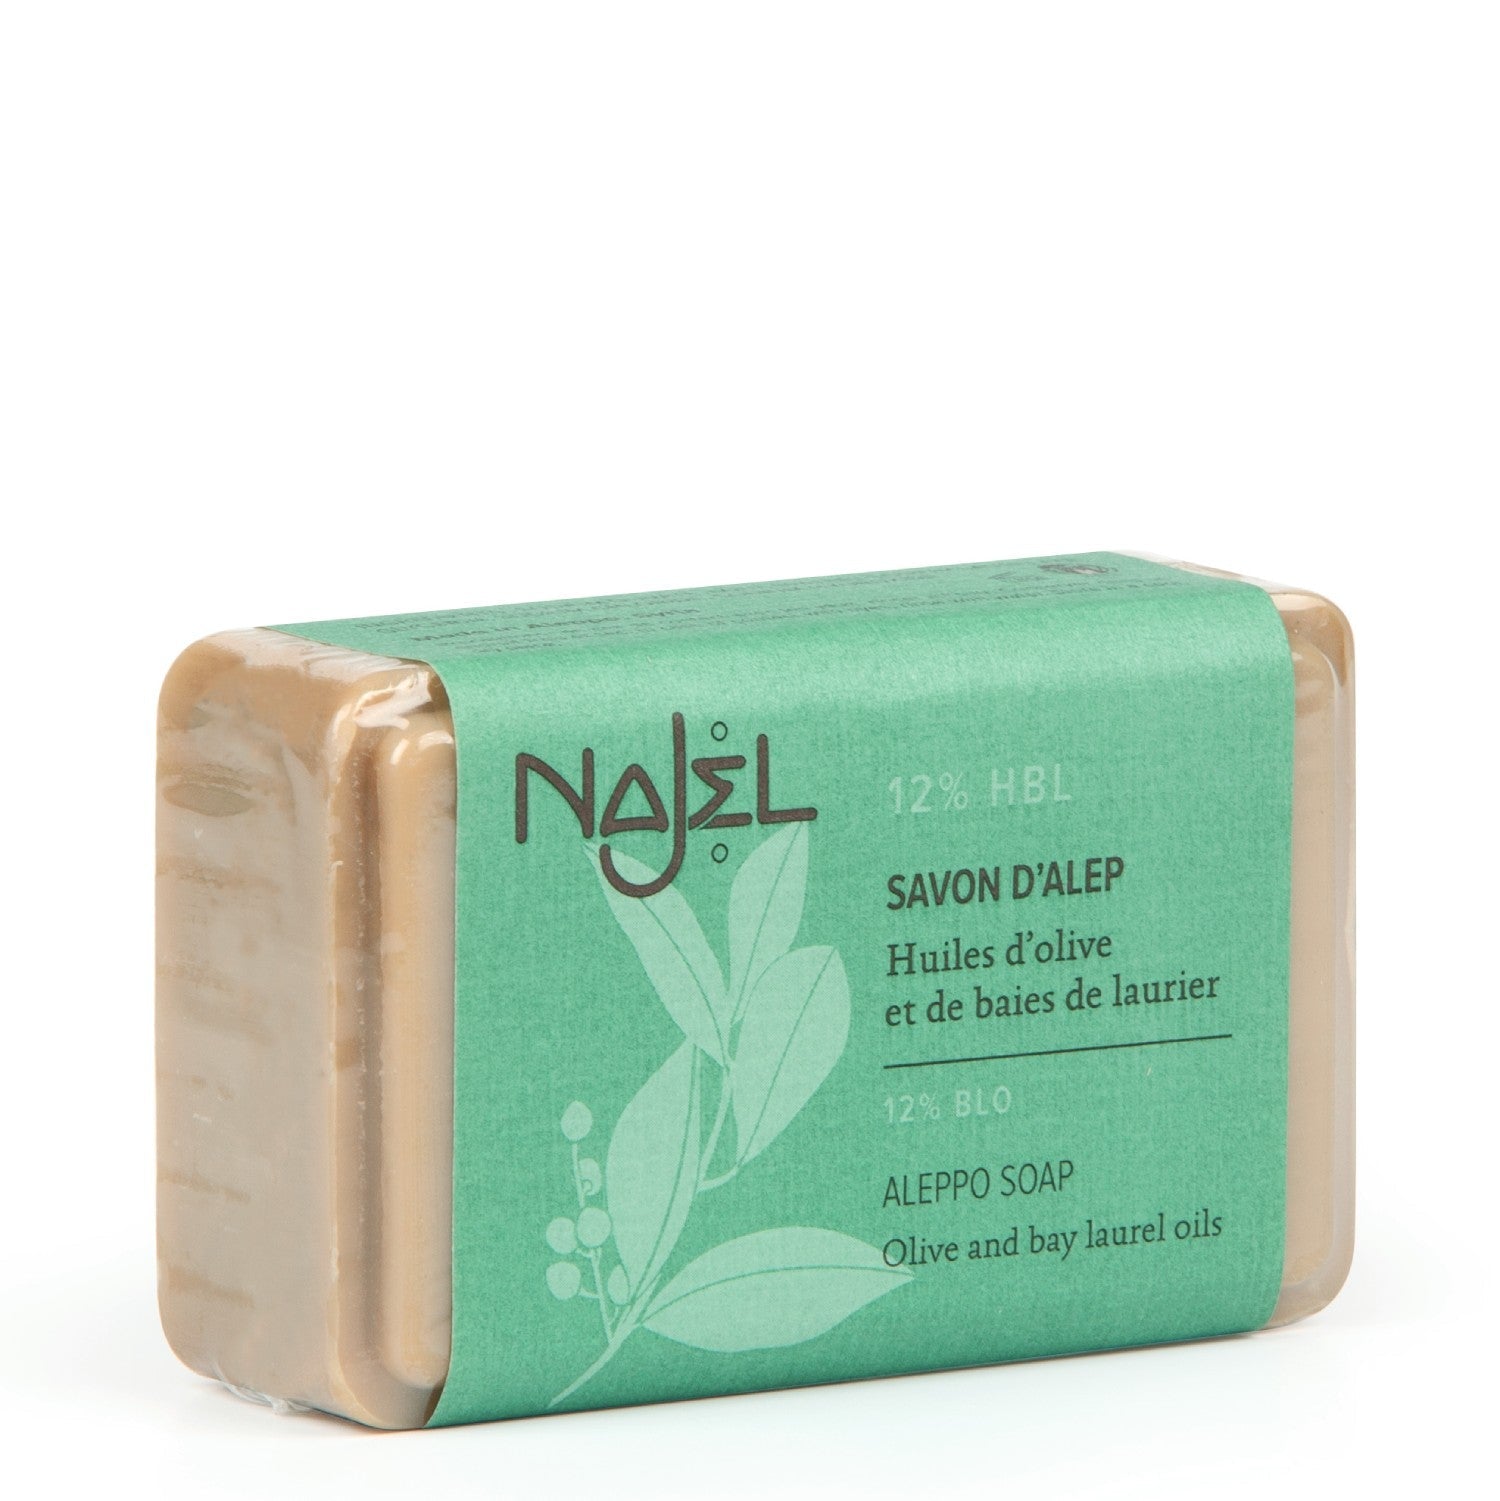 NAJEL Organic Skincare - Aleppo Soap Olive &amp; Bay Laurel Oils (12% BLO), 100g, Organic, Vegan